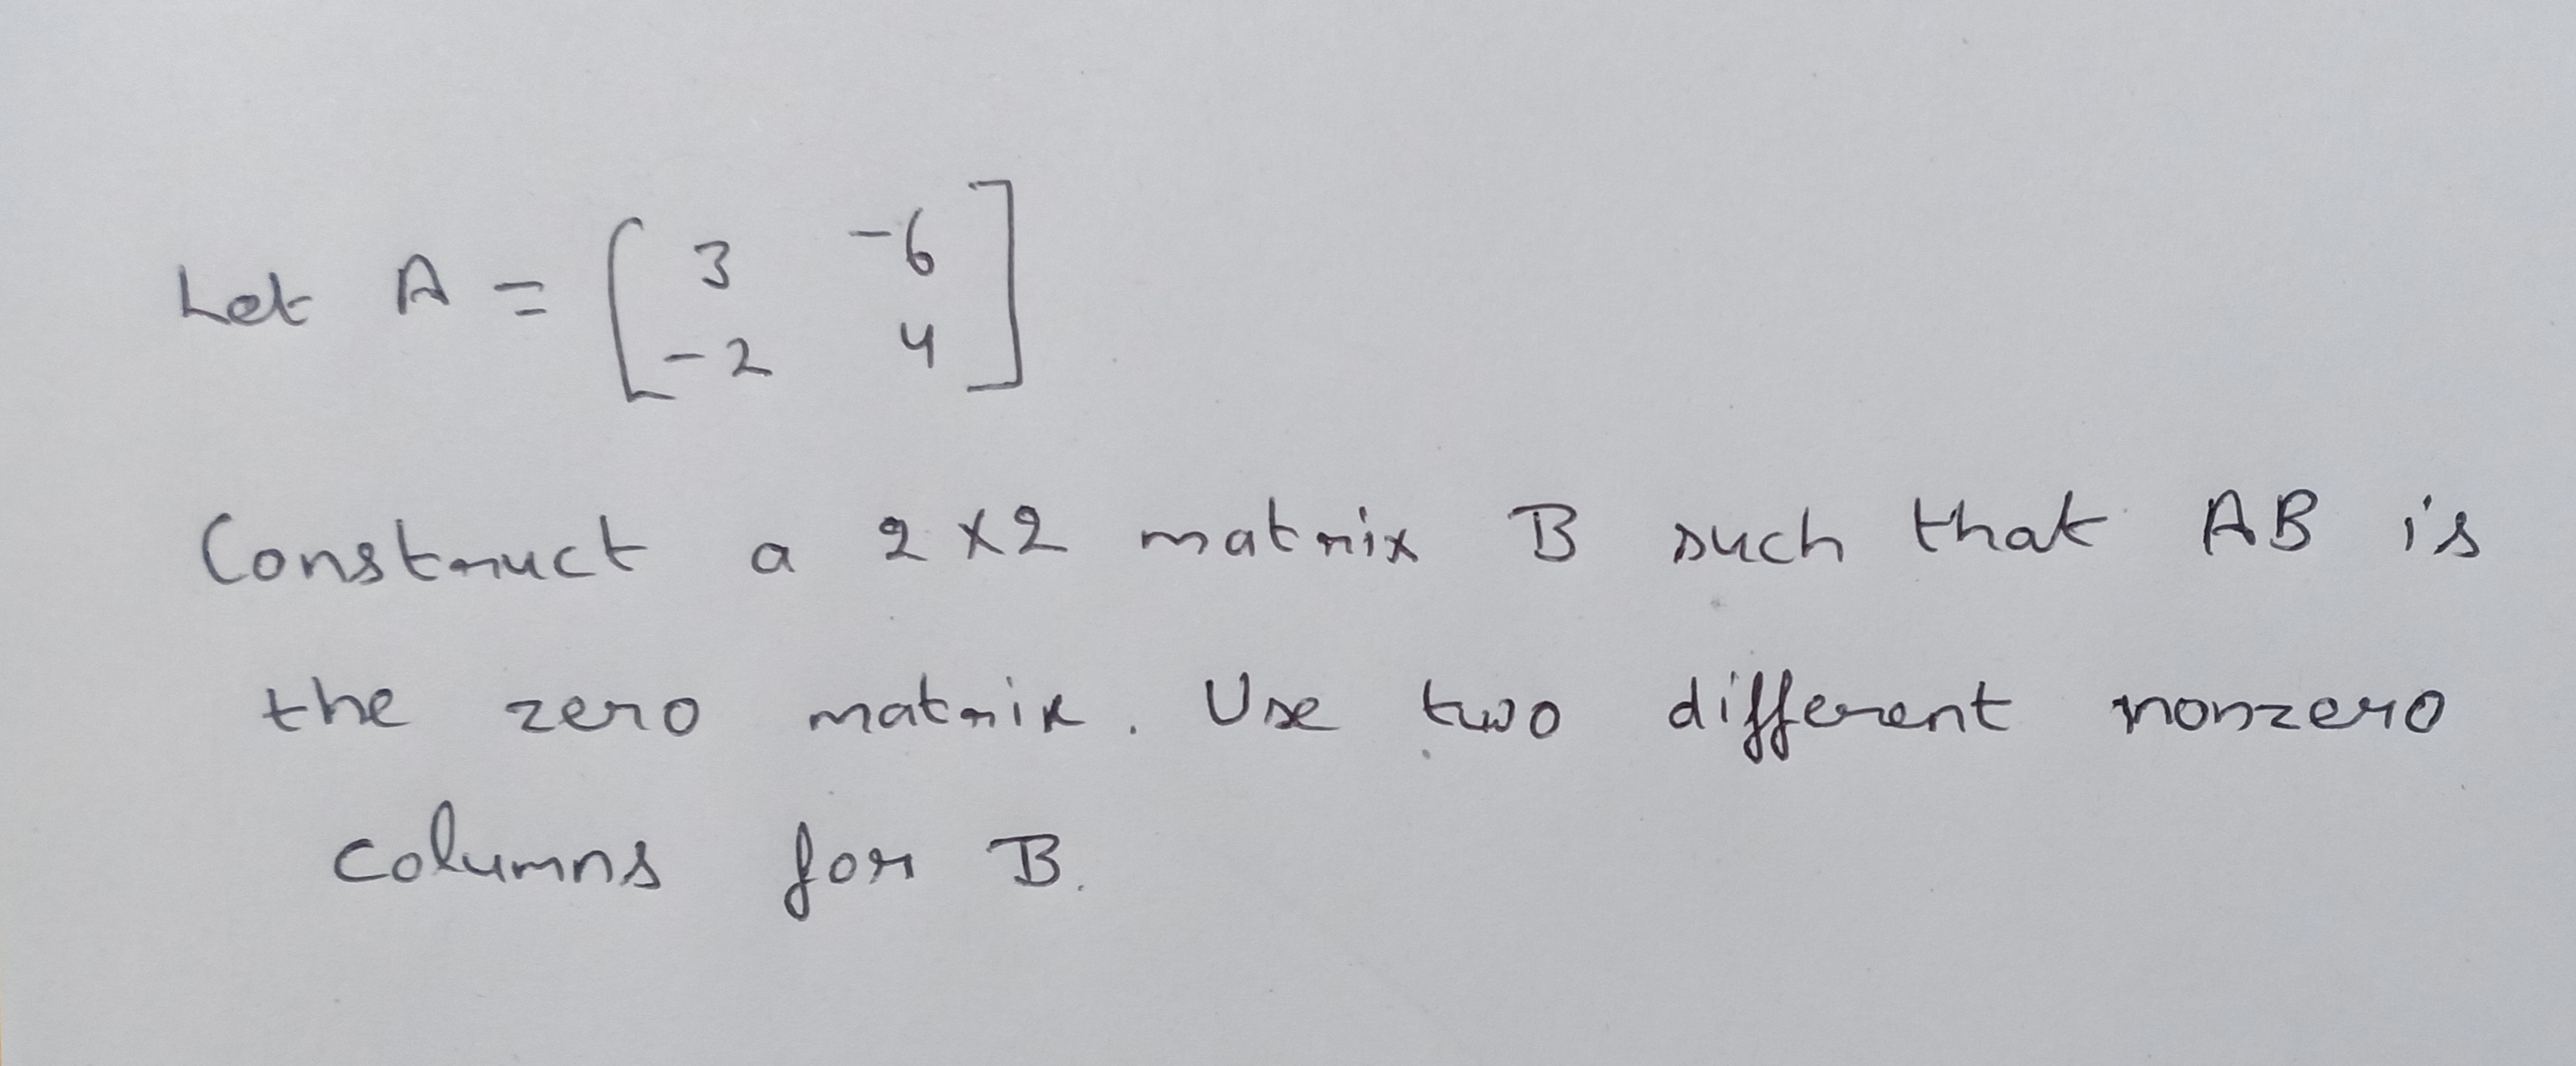 -6
Let A-
Ч
-2
Constauct
2 X2 mat mix B
such that AB is
the
matmik. Use
zero
two different nonzer0
columns fon B
